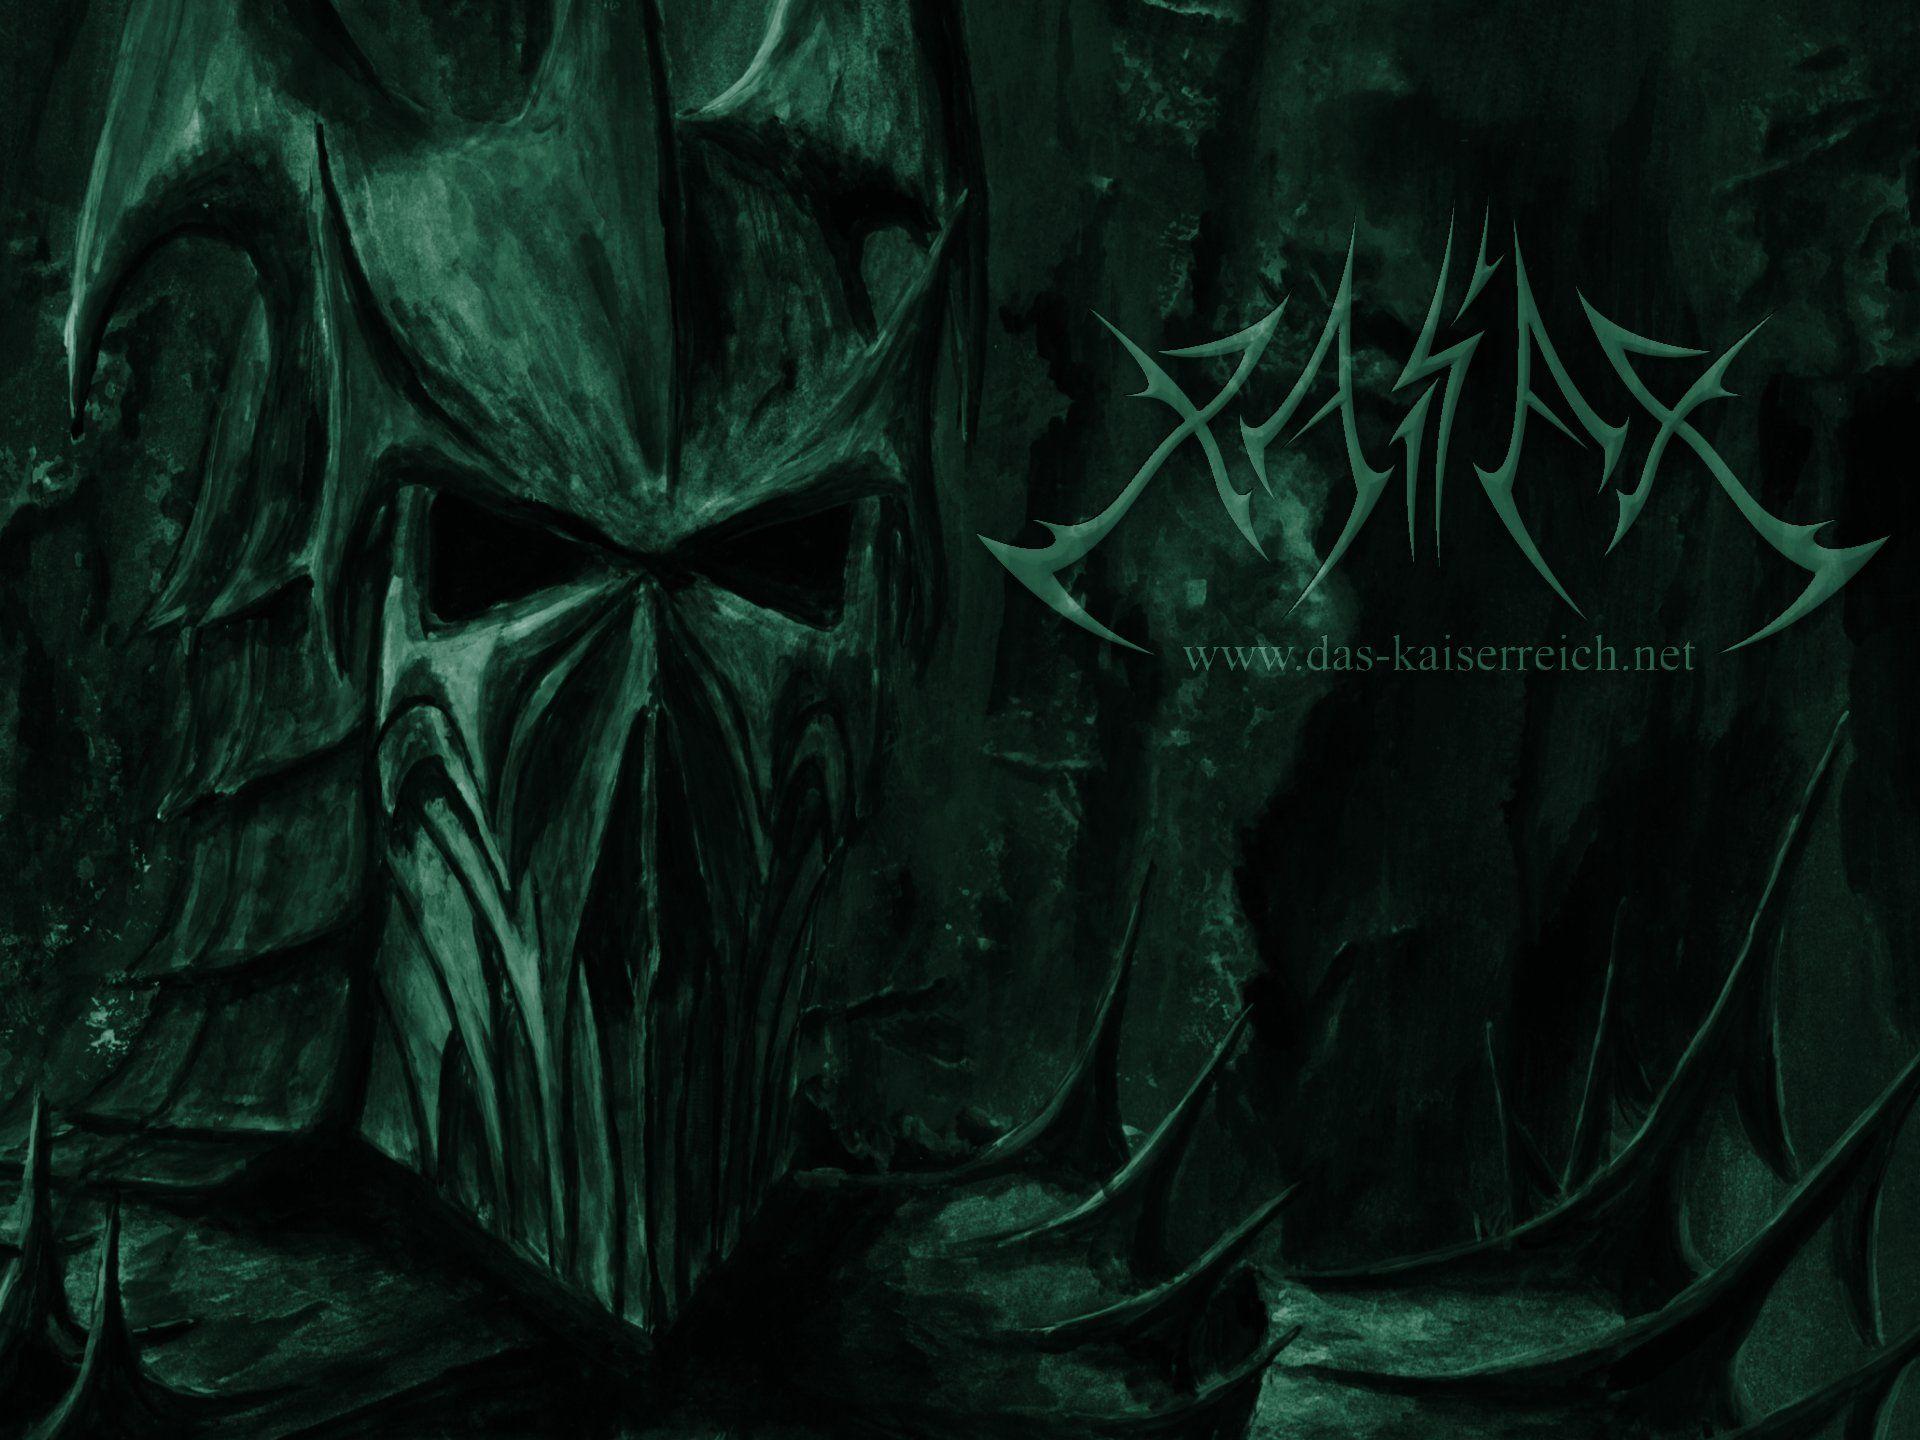 Free Gothic Doom symphonic black metal download. Free Gothic black